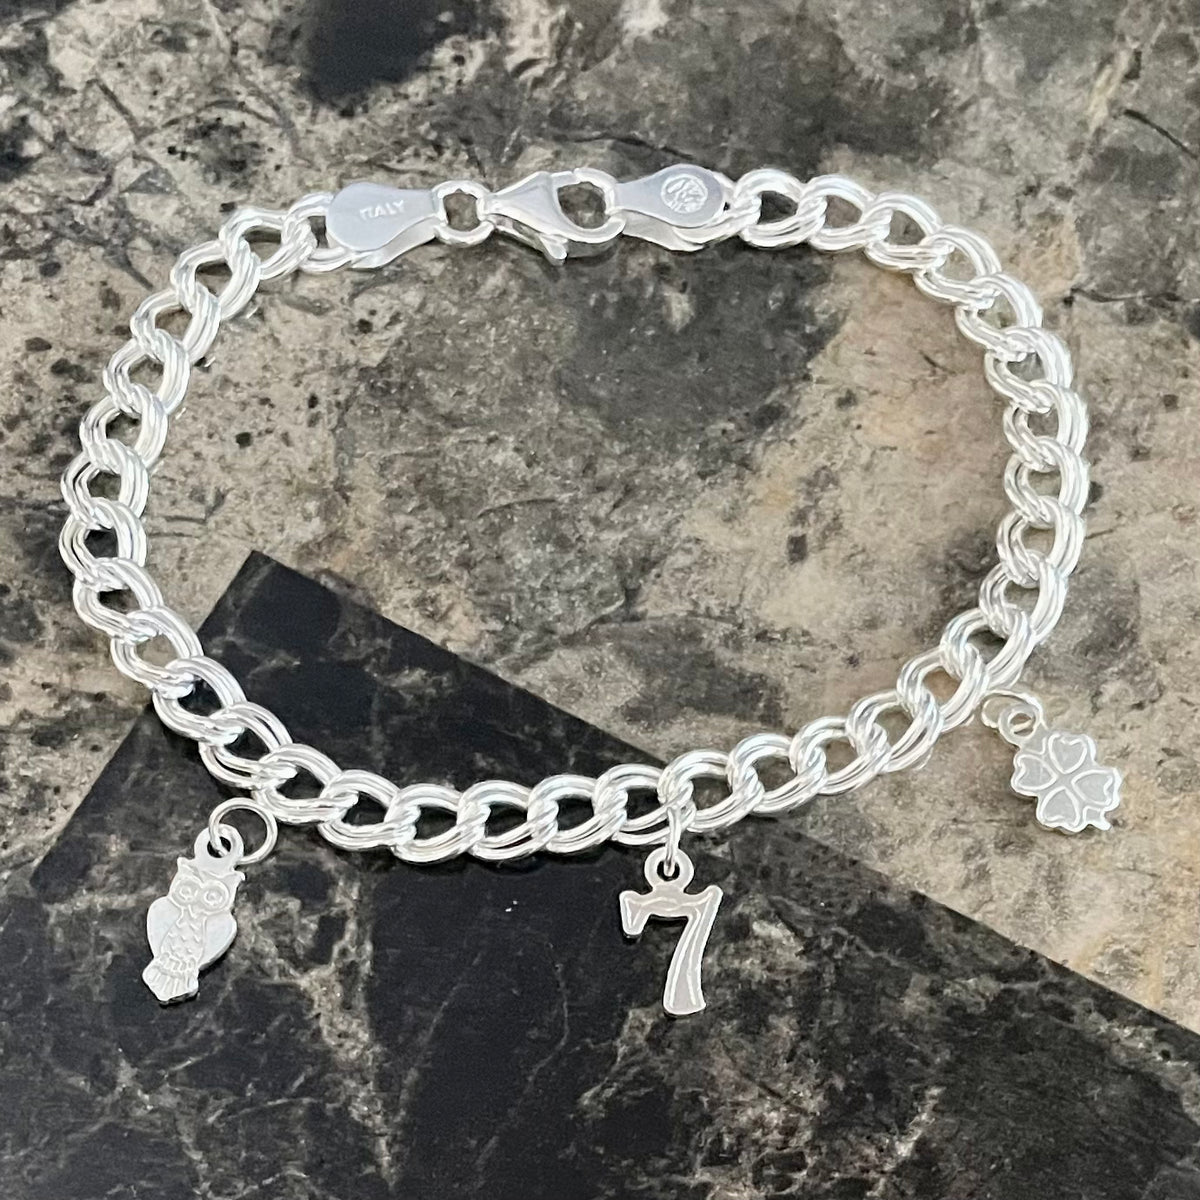 Alma Charm bracelet Silver Sterling 925 / 140 - 180